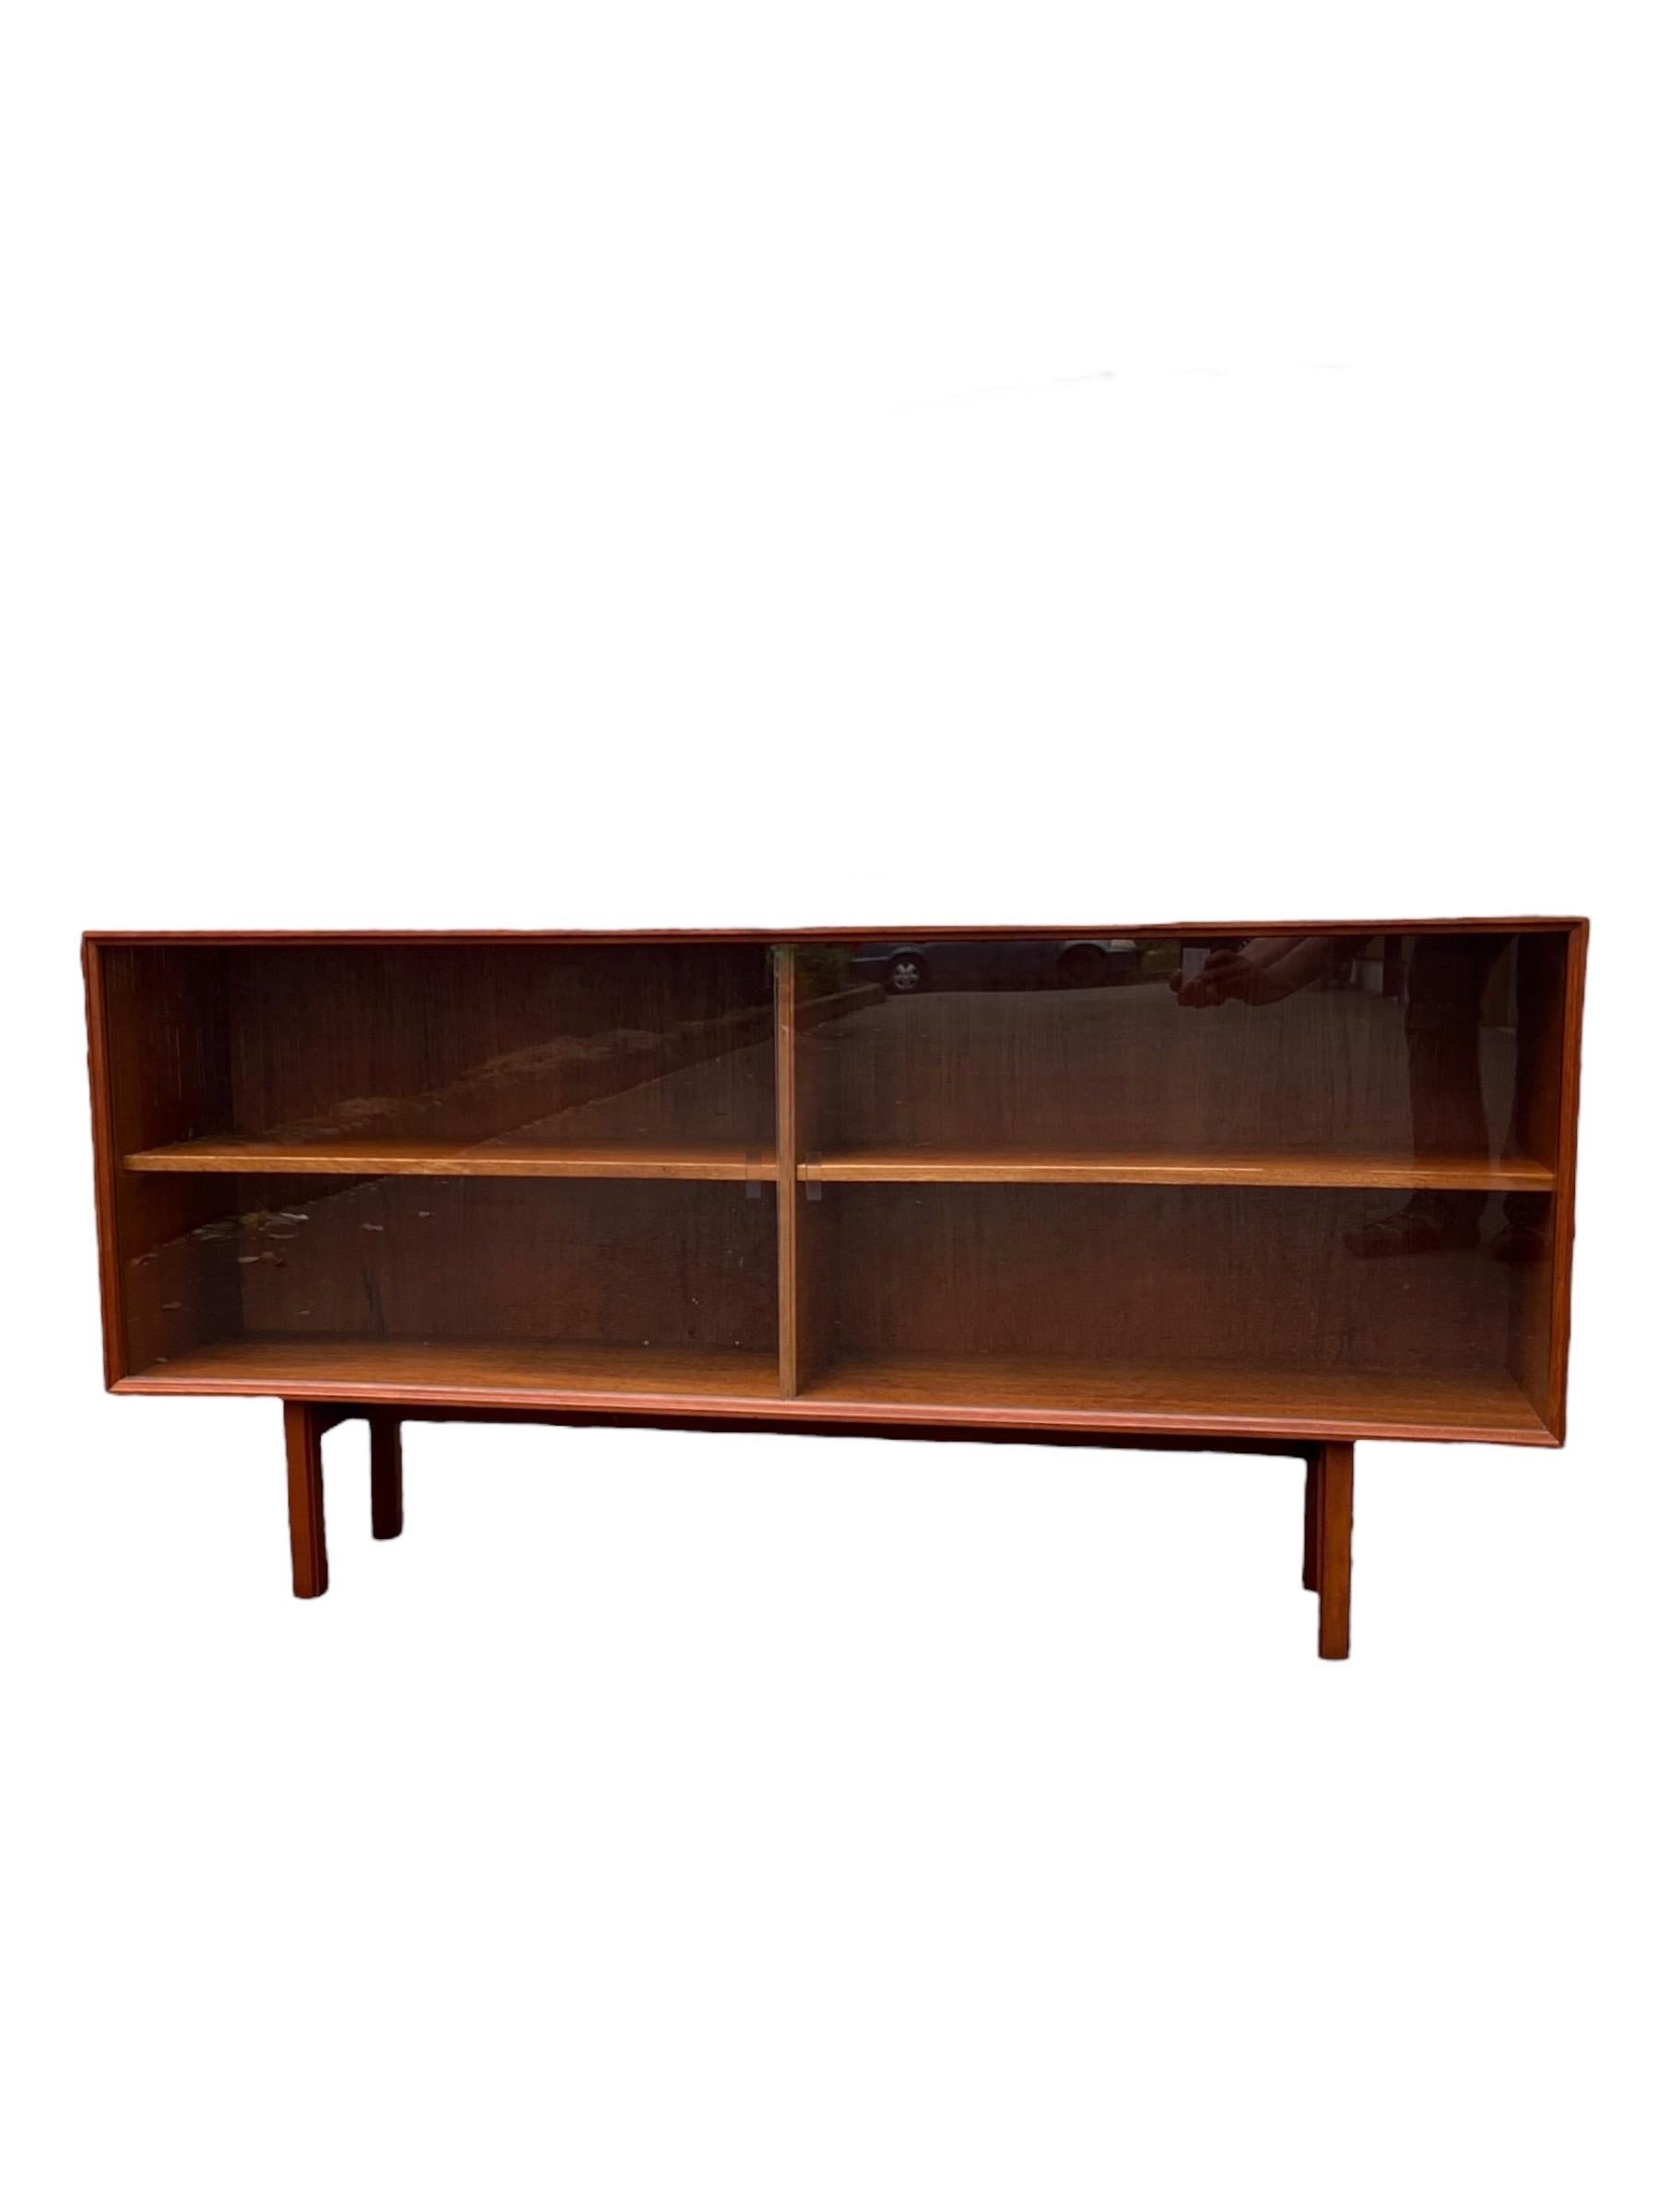 Vintage Danish Mid Century Modern Teak Wood Book Shelf Display Cabinet Adjustable Shelf.

Dimensions. 60 W ; 12 1/2 D ; 29 H
Inside (Right ). 29 1/2 W ; 11 1/2 D ; 18 3/4 H
Inside (Left ). 29 1/2 W ; 11 1/2 D ; 18 3/4 H